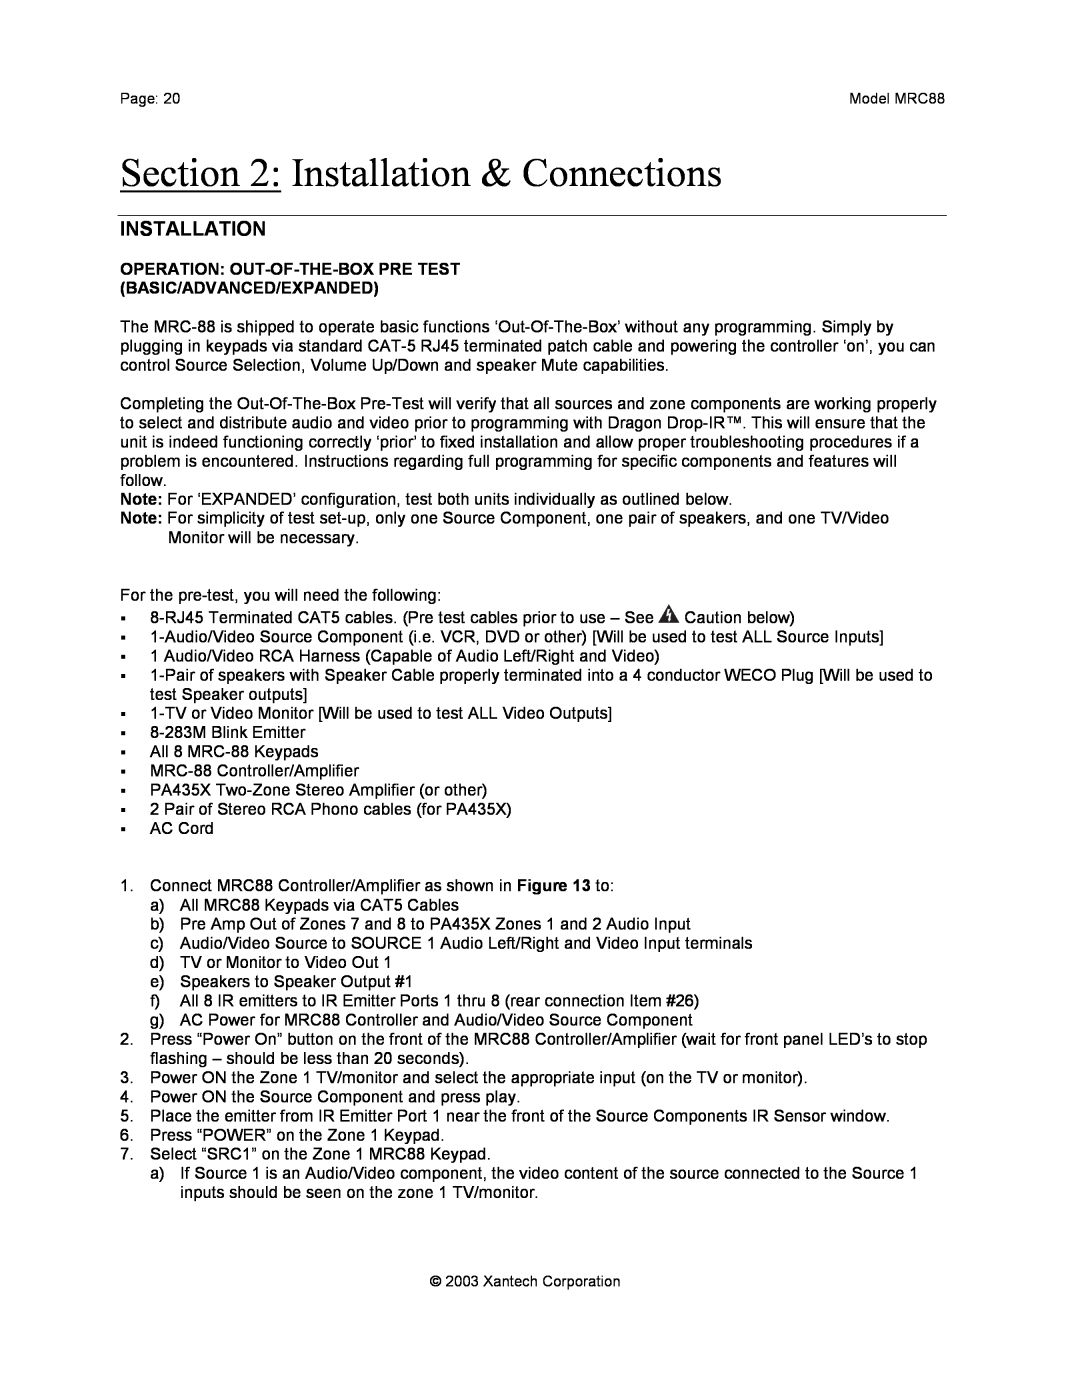 Xantech mrc88 installation instructions Installation & Connections 